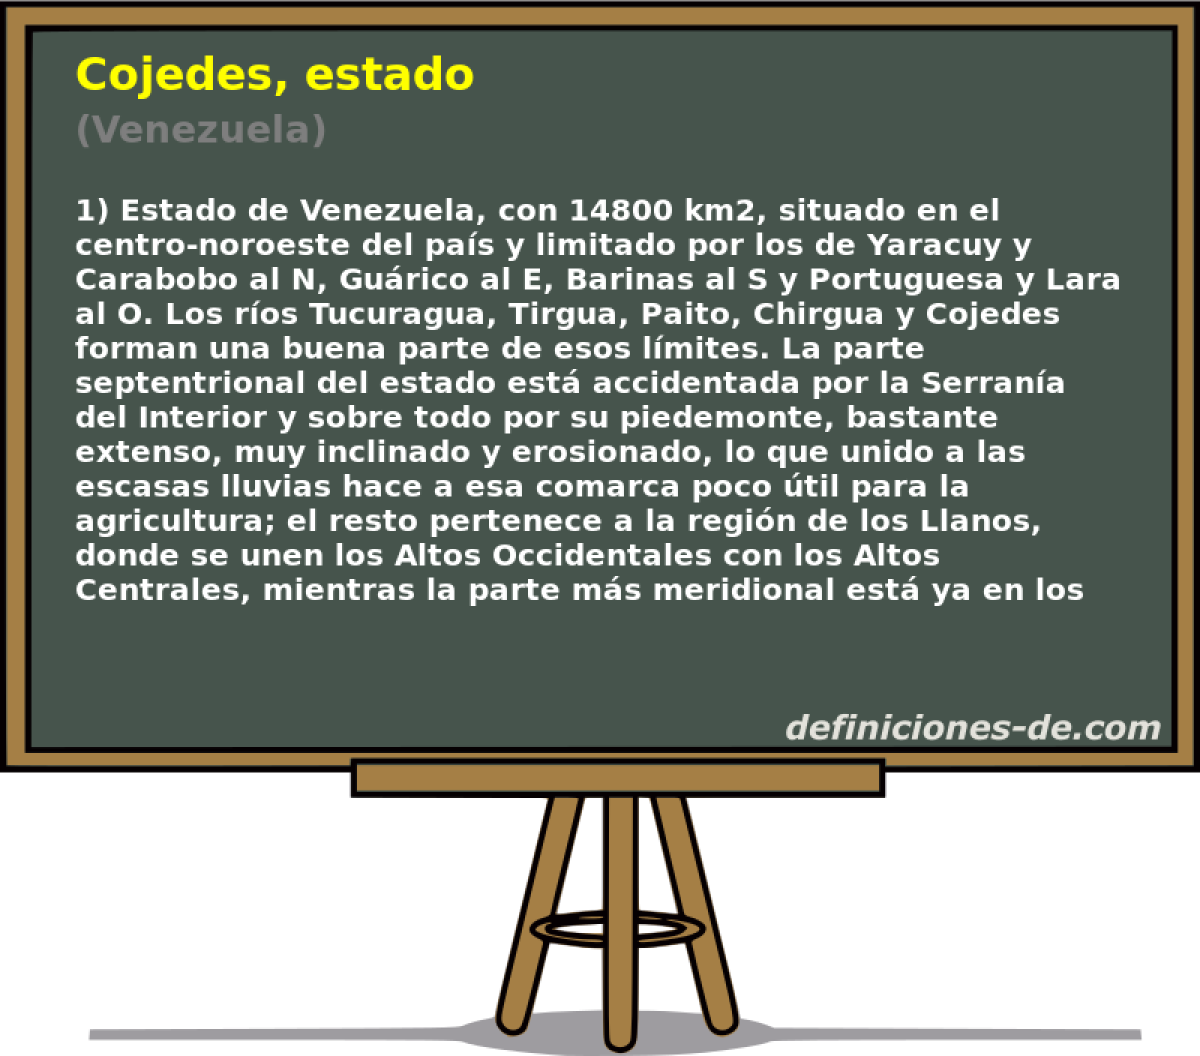 Cojedes, estado (Venezuela)